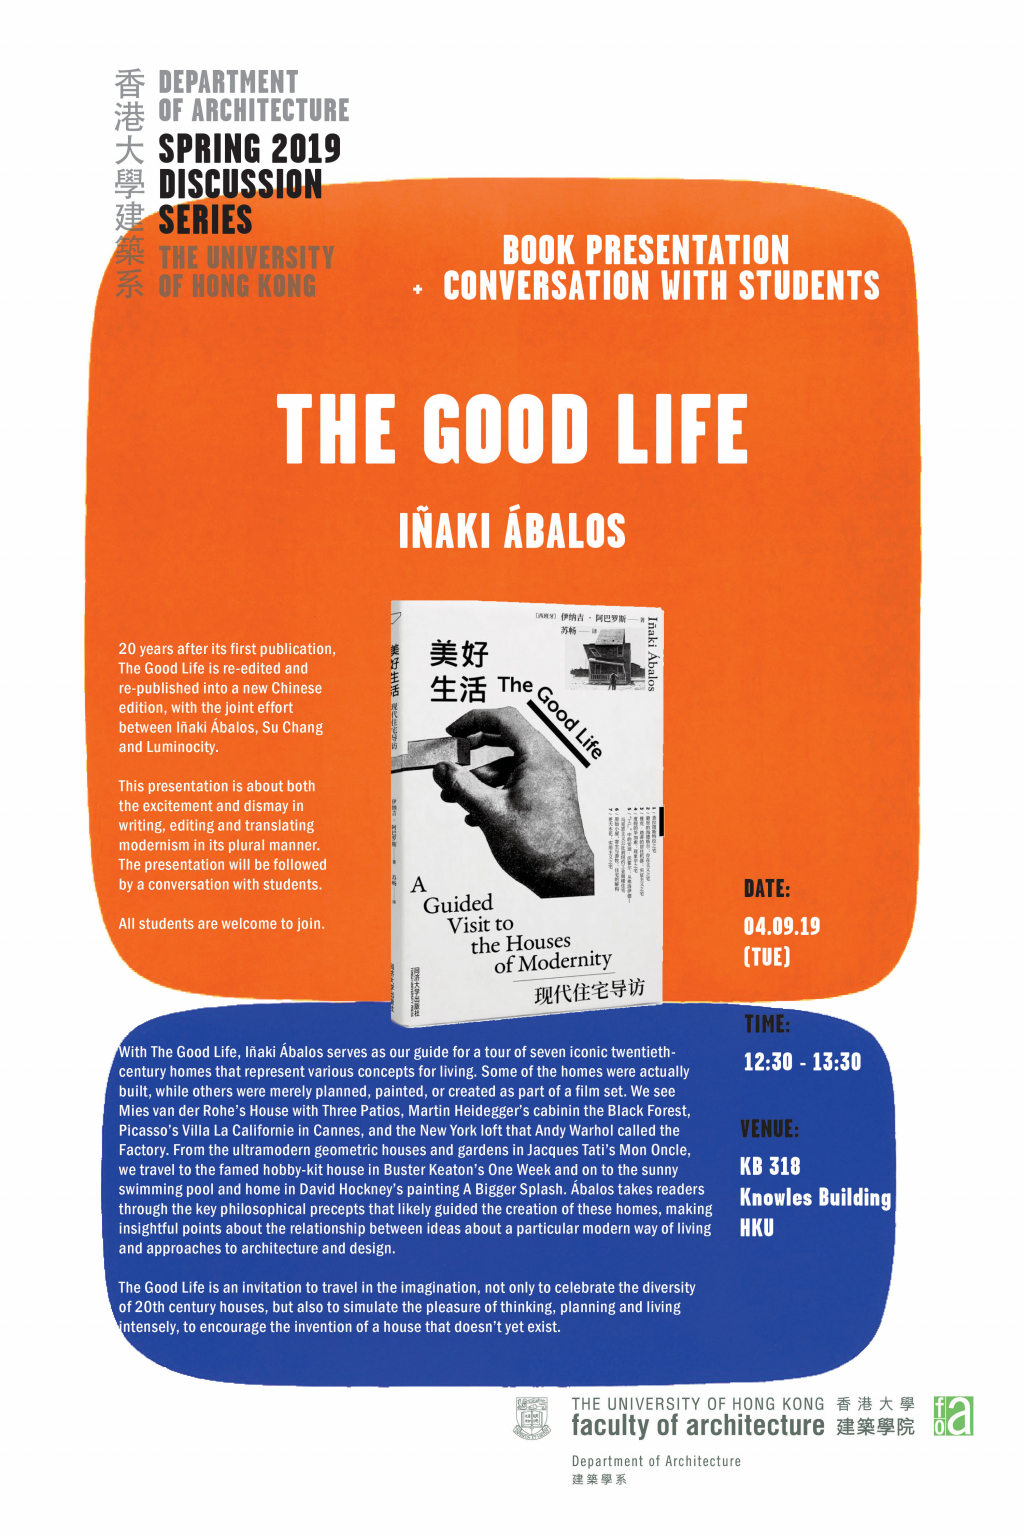 'The Good Life' Book Presentation by Iñaki Ábalos, 9 April 2019